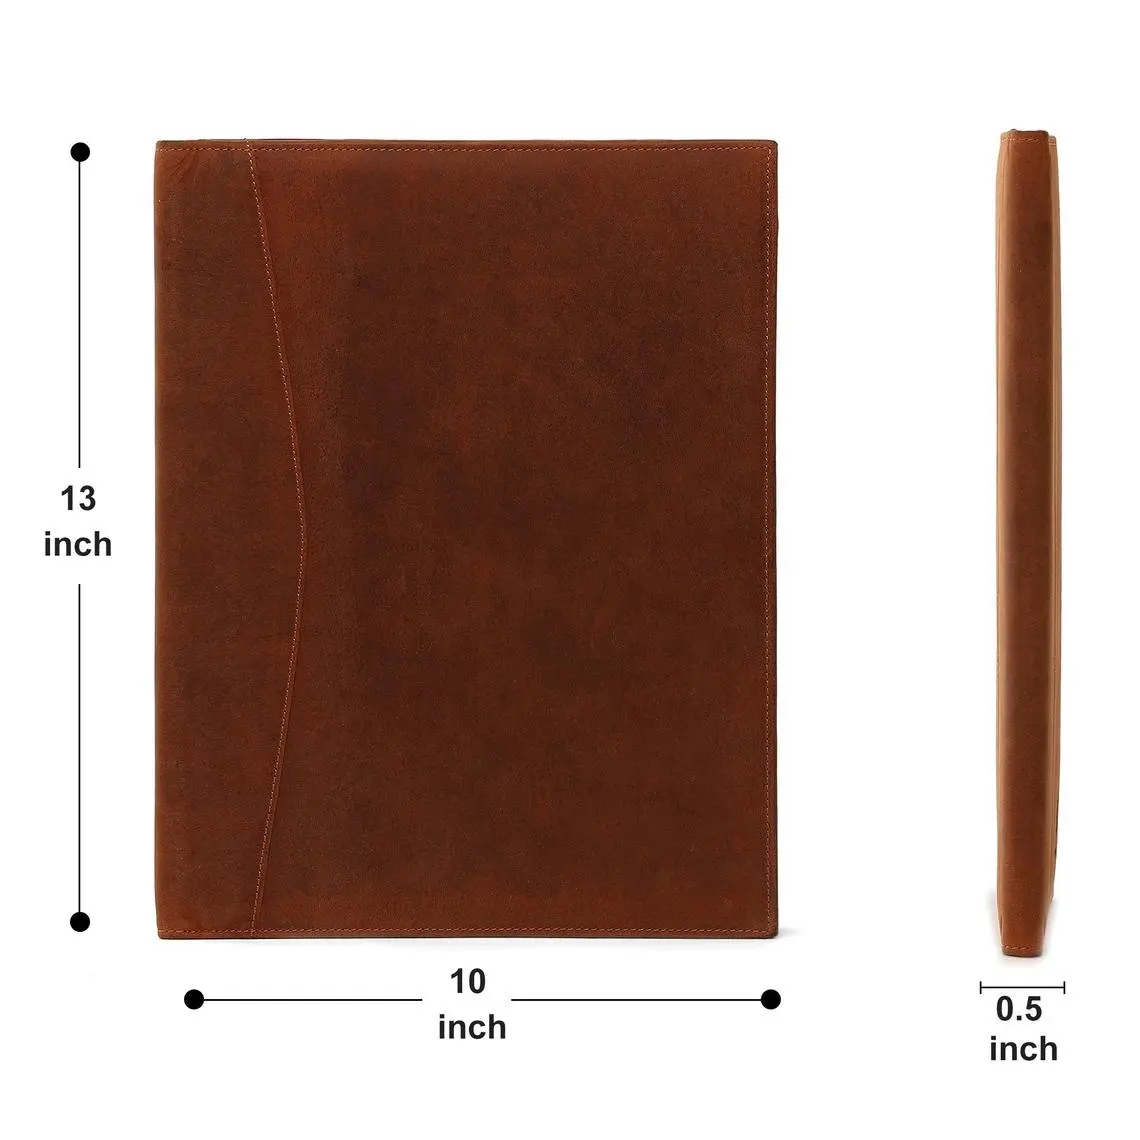 Premium Quality Leather Portfolio, A4 Document Holder Business portfolio Case Sleeve Luxurious Real Leather Portfolio